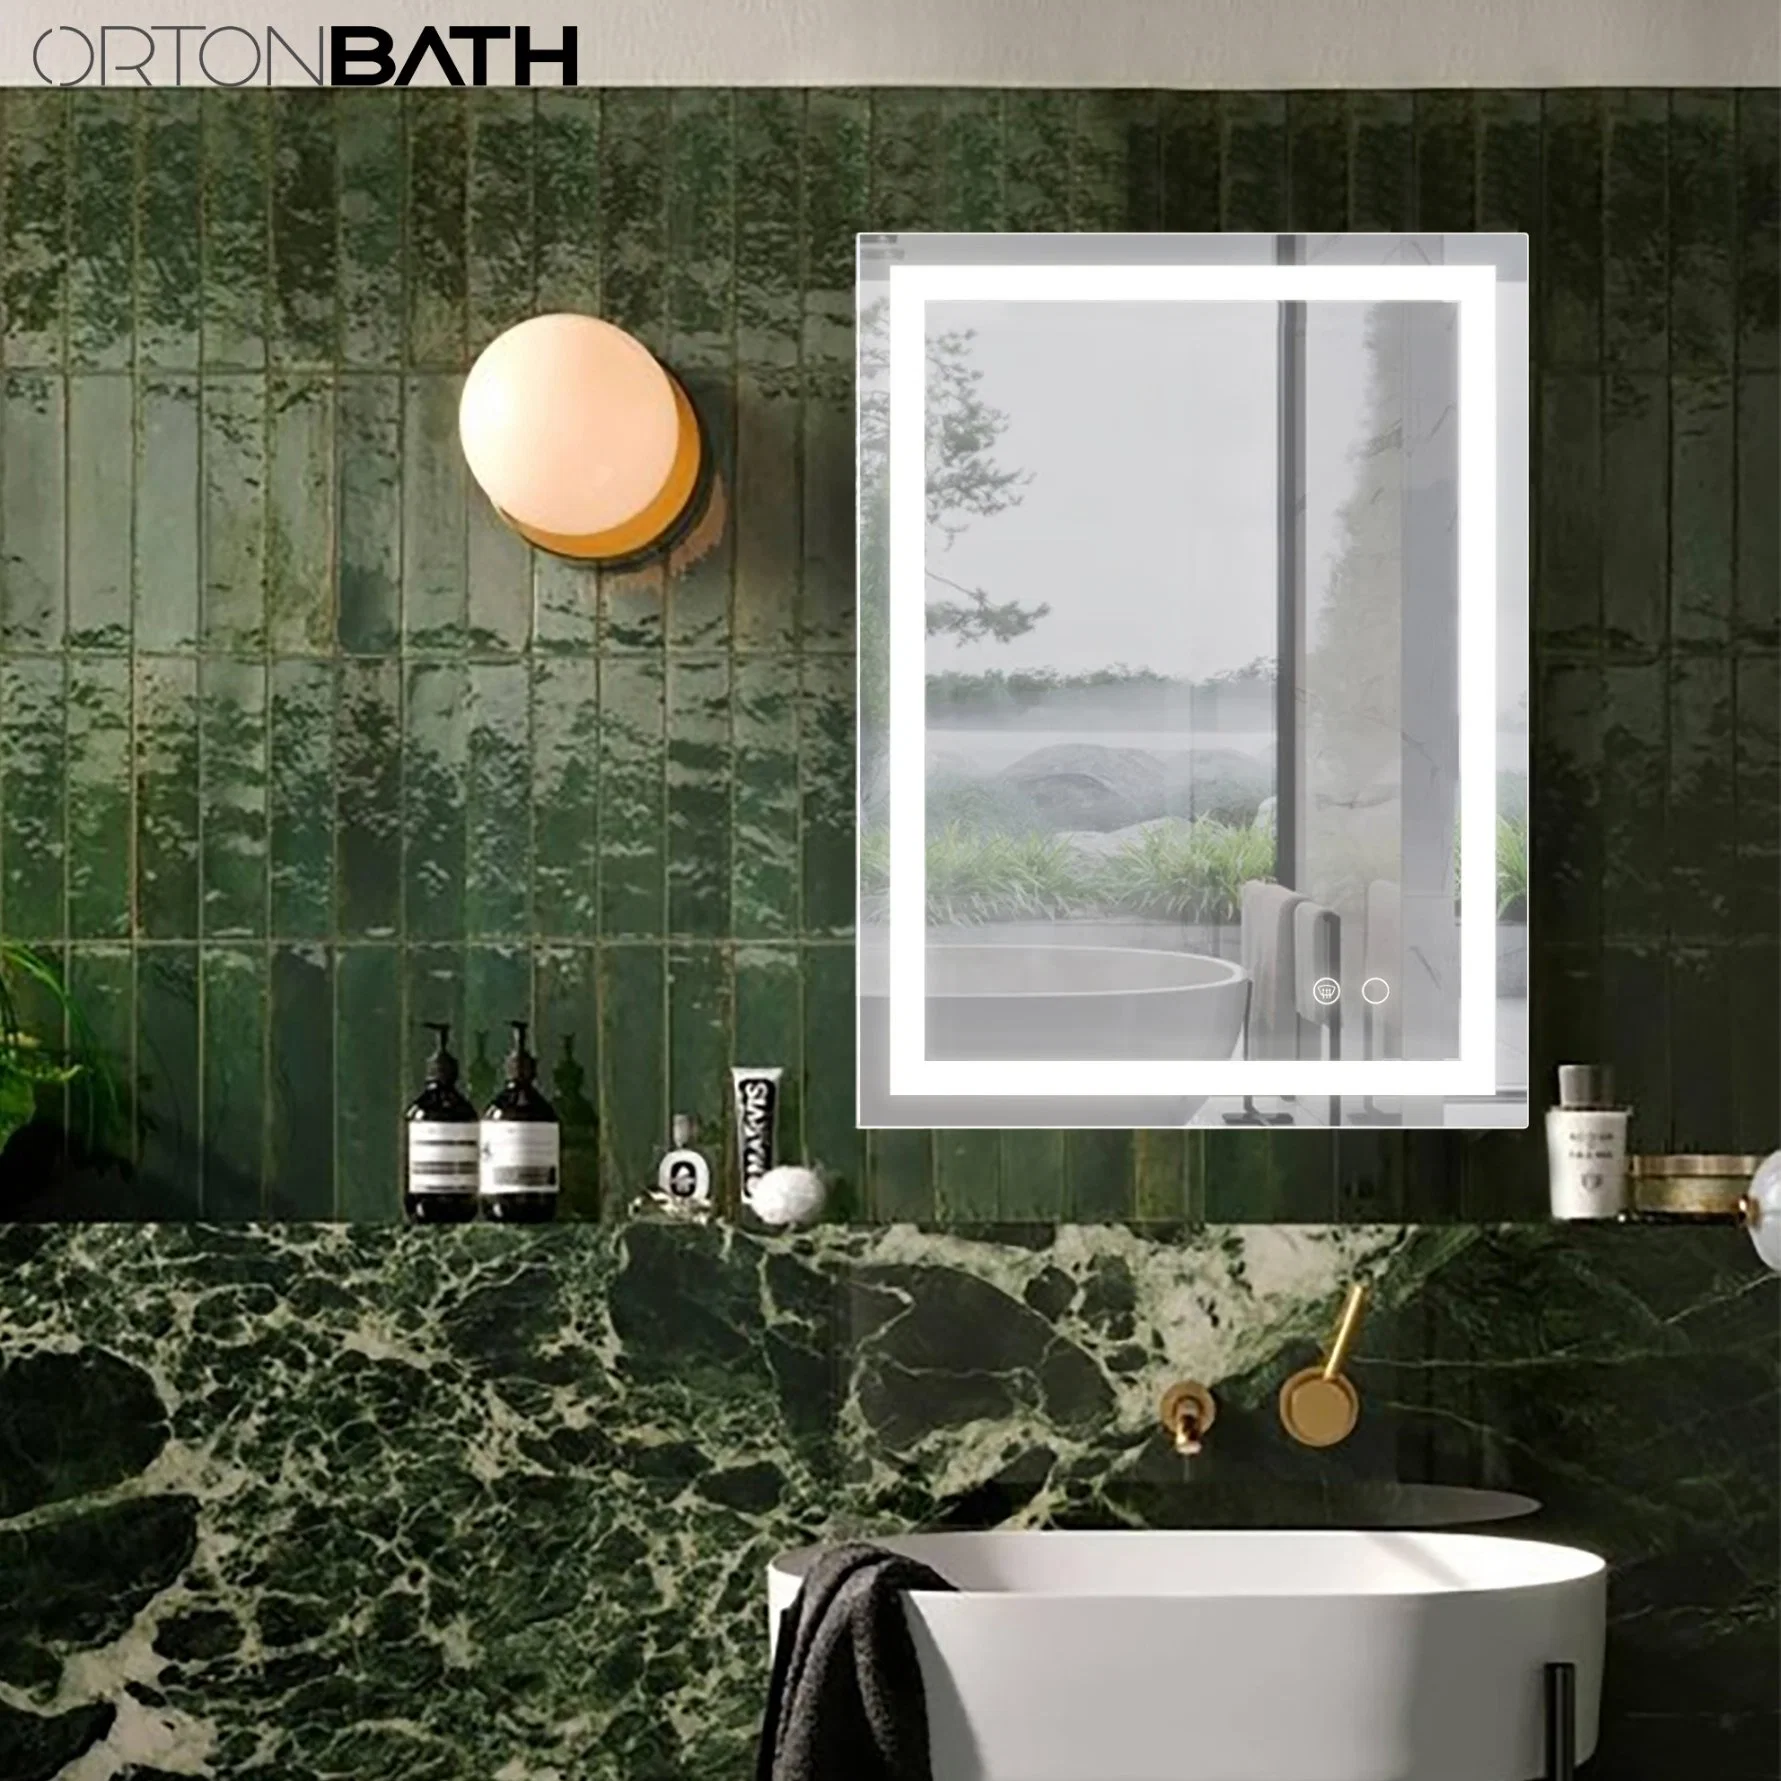 Ortonbath 24X32 LED Badezimmer Spiegel mit Memory Lights Anti-Fog dimmbar Beleuchteter Kosmetikspiegel Im Badezimmer Mit Hintergrundbeleuchtung Und Frontbeleuchtung